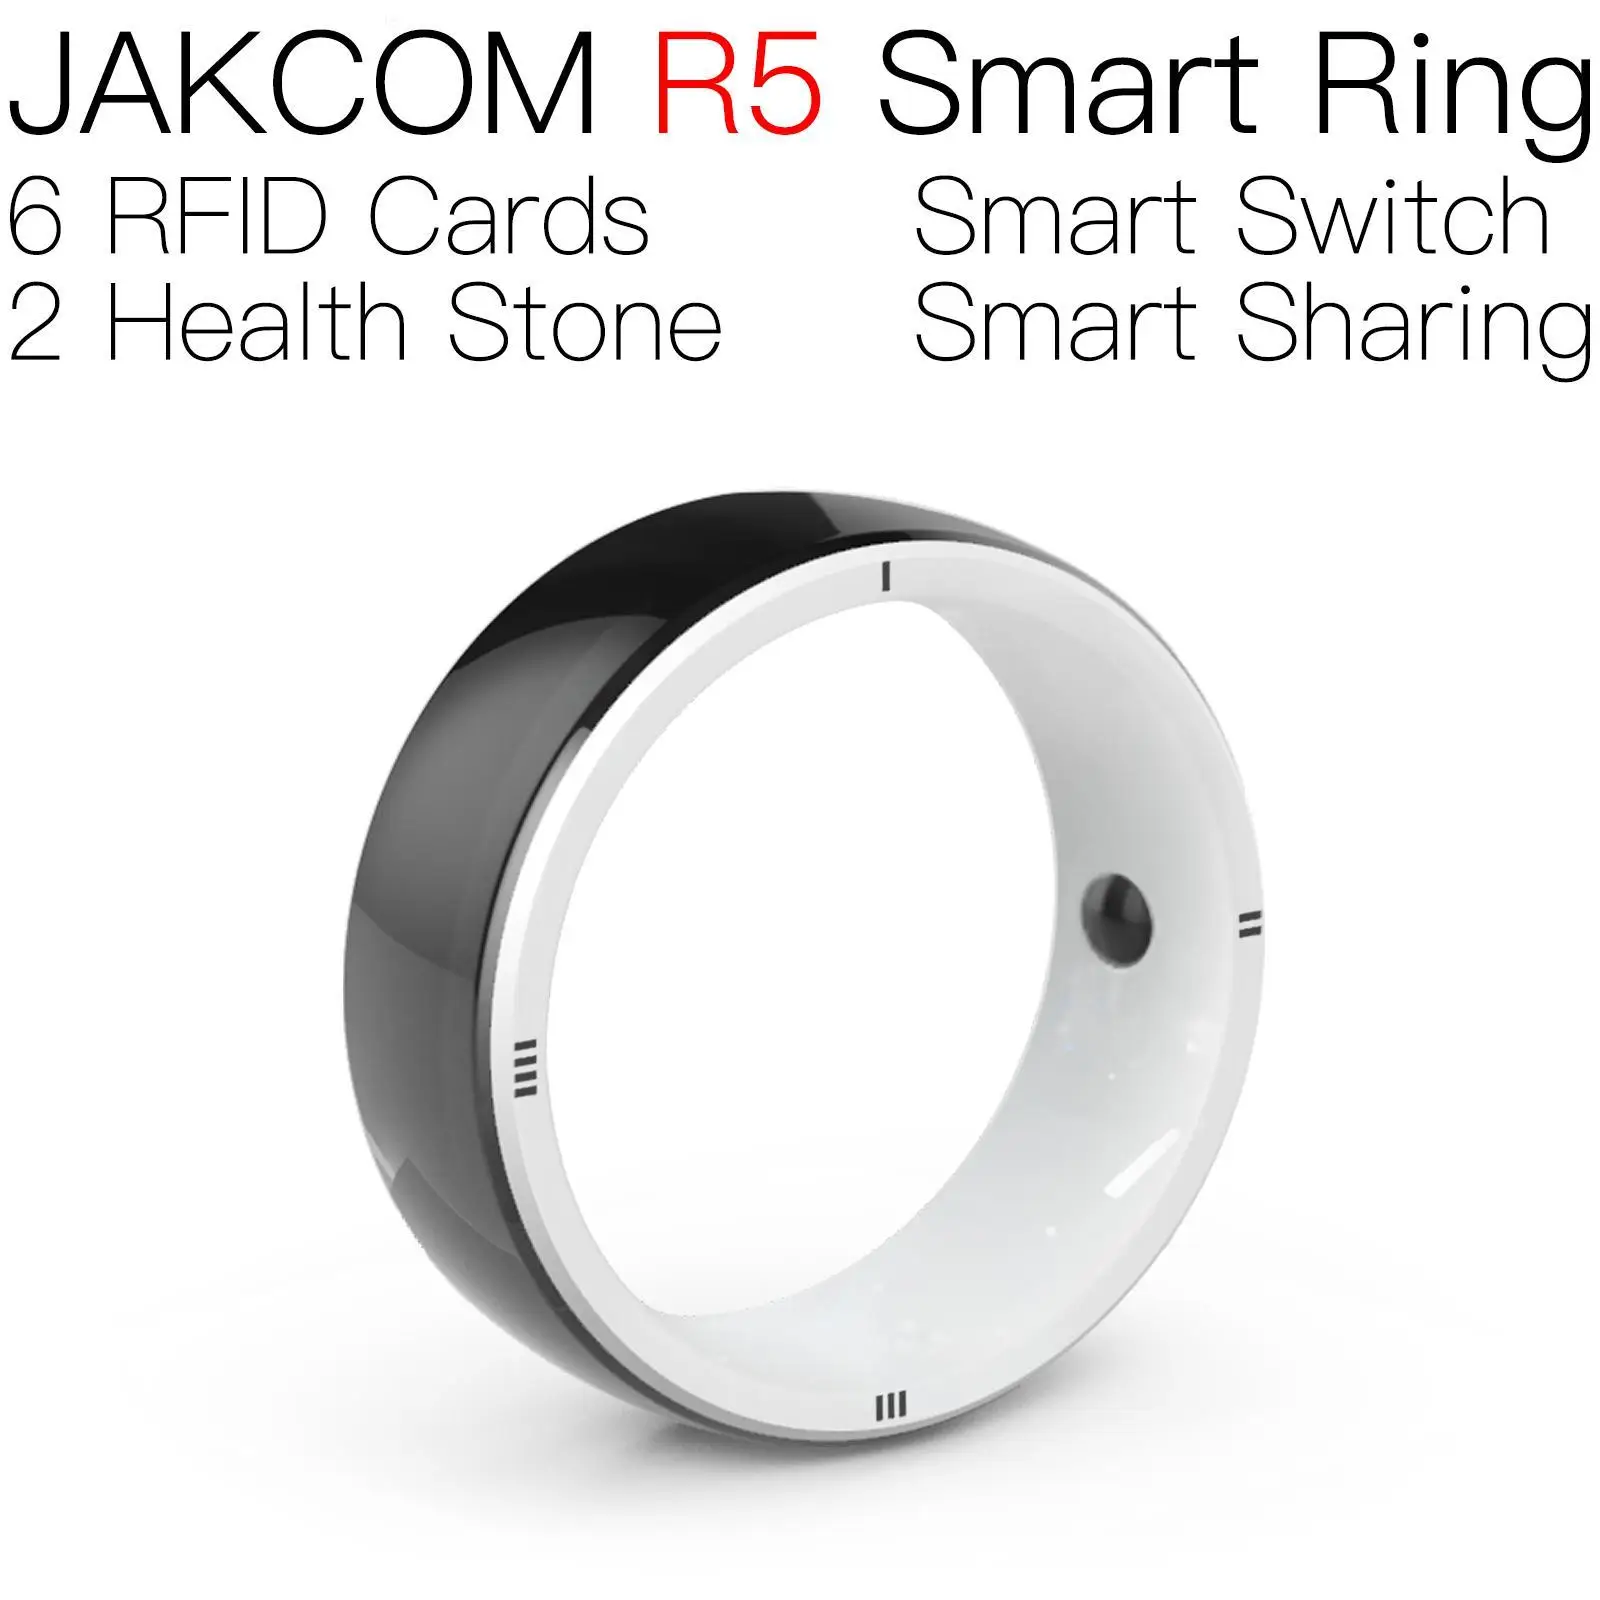 

JAKCOM R5 Smart Ring Super value than flashlight wristband tag hueur watch m26 plus mesh for women free bandas